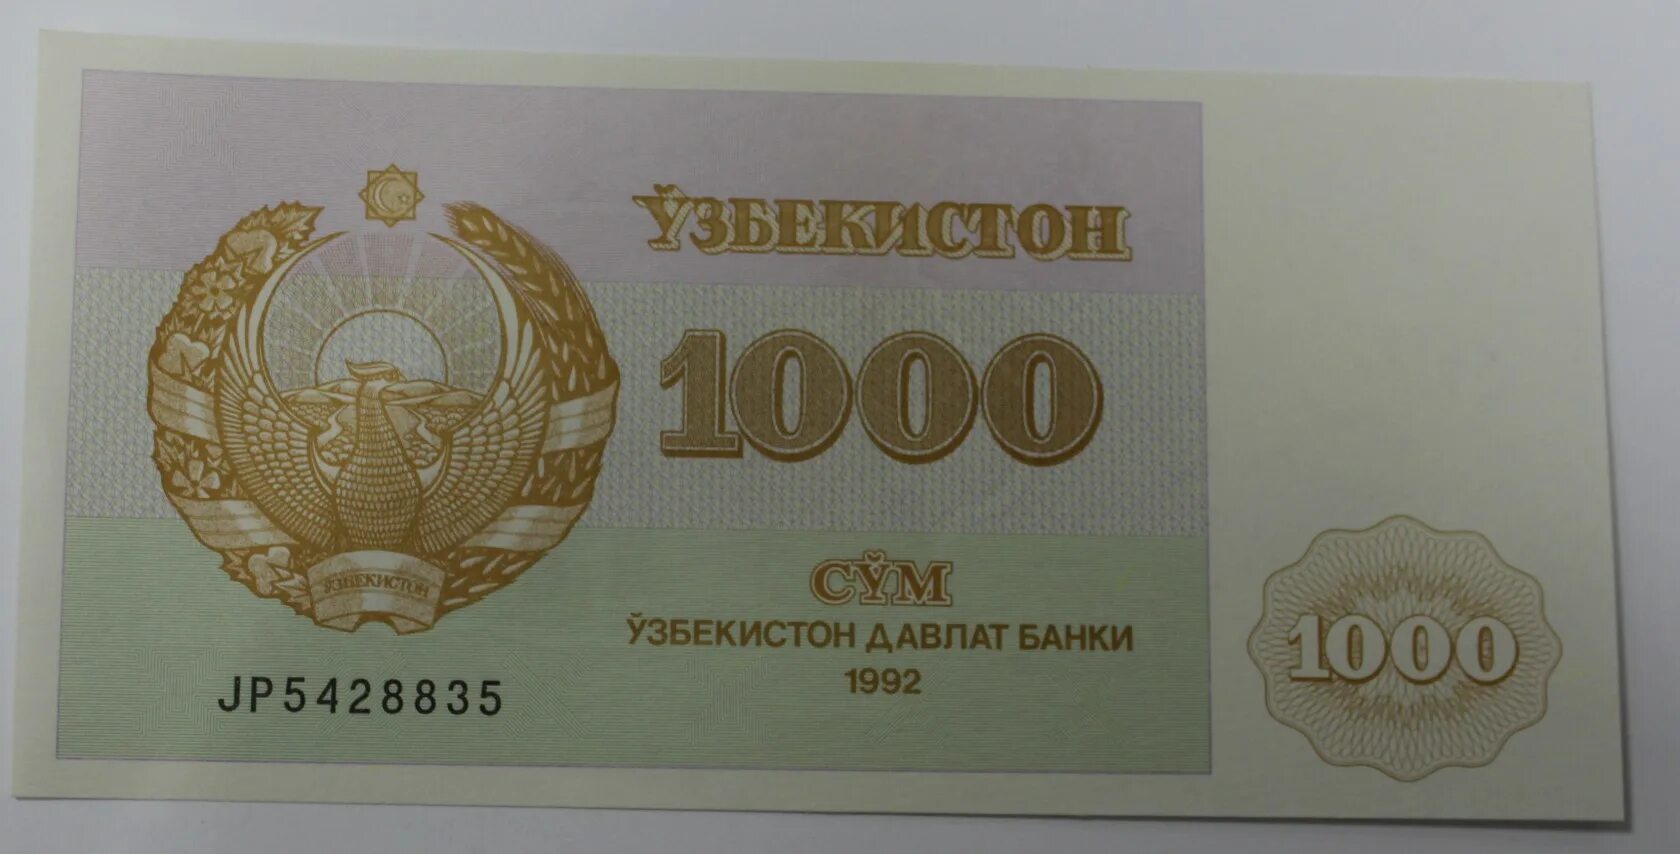 1000 Сум Узбекистан. Купюра Узбекистана 1000. Купюра 1000 сум Узбекистан. Банкноты Узбекистана 1992 года.